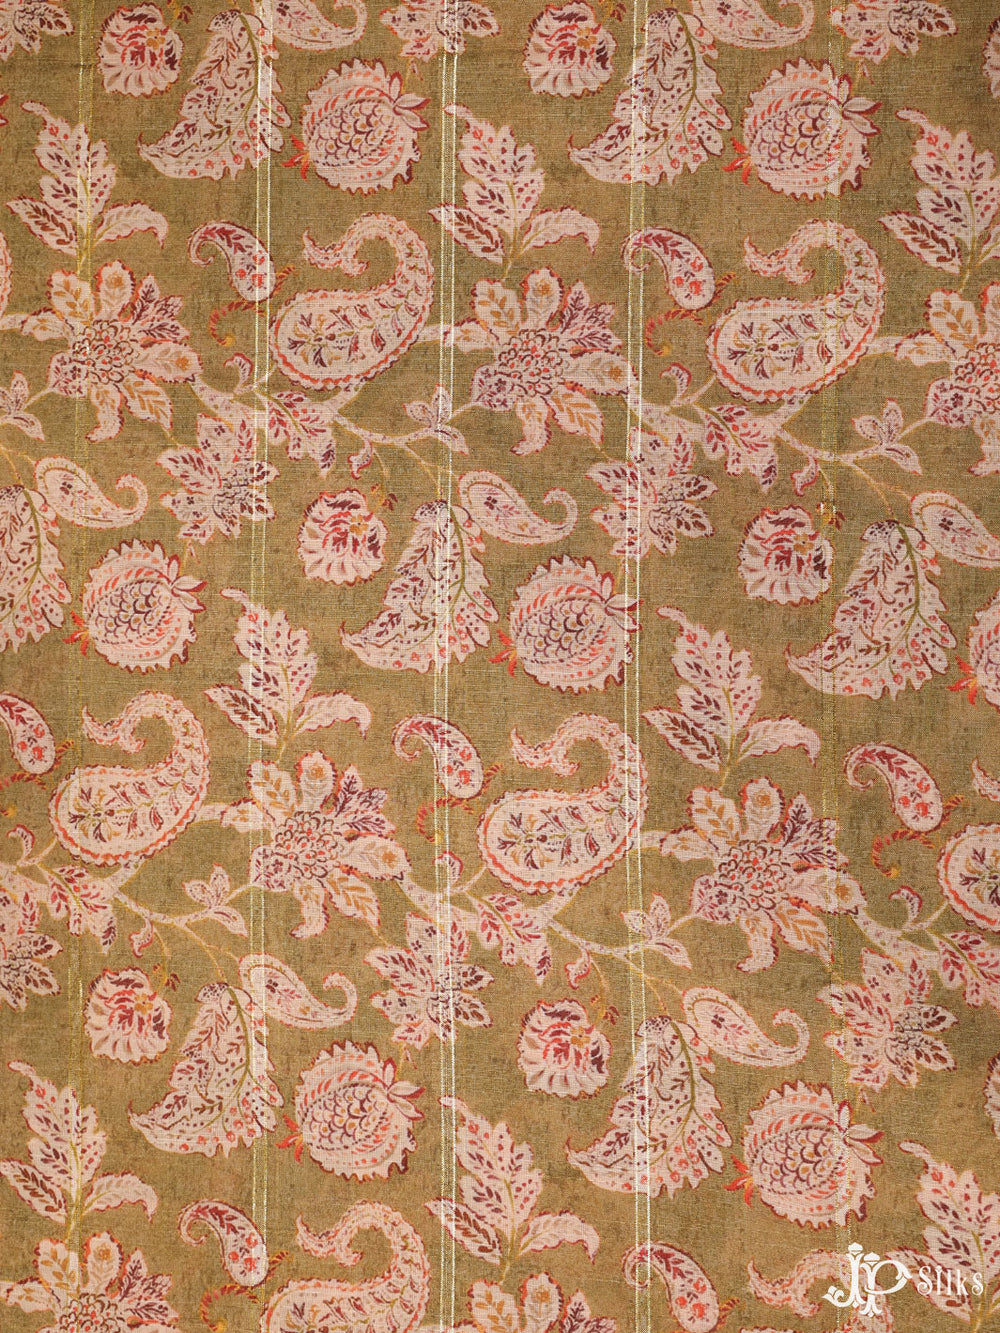 Green Digital Printed Munga Cotton Fabric - E3330 - View 1